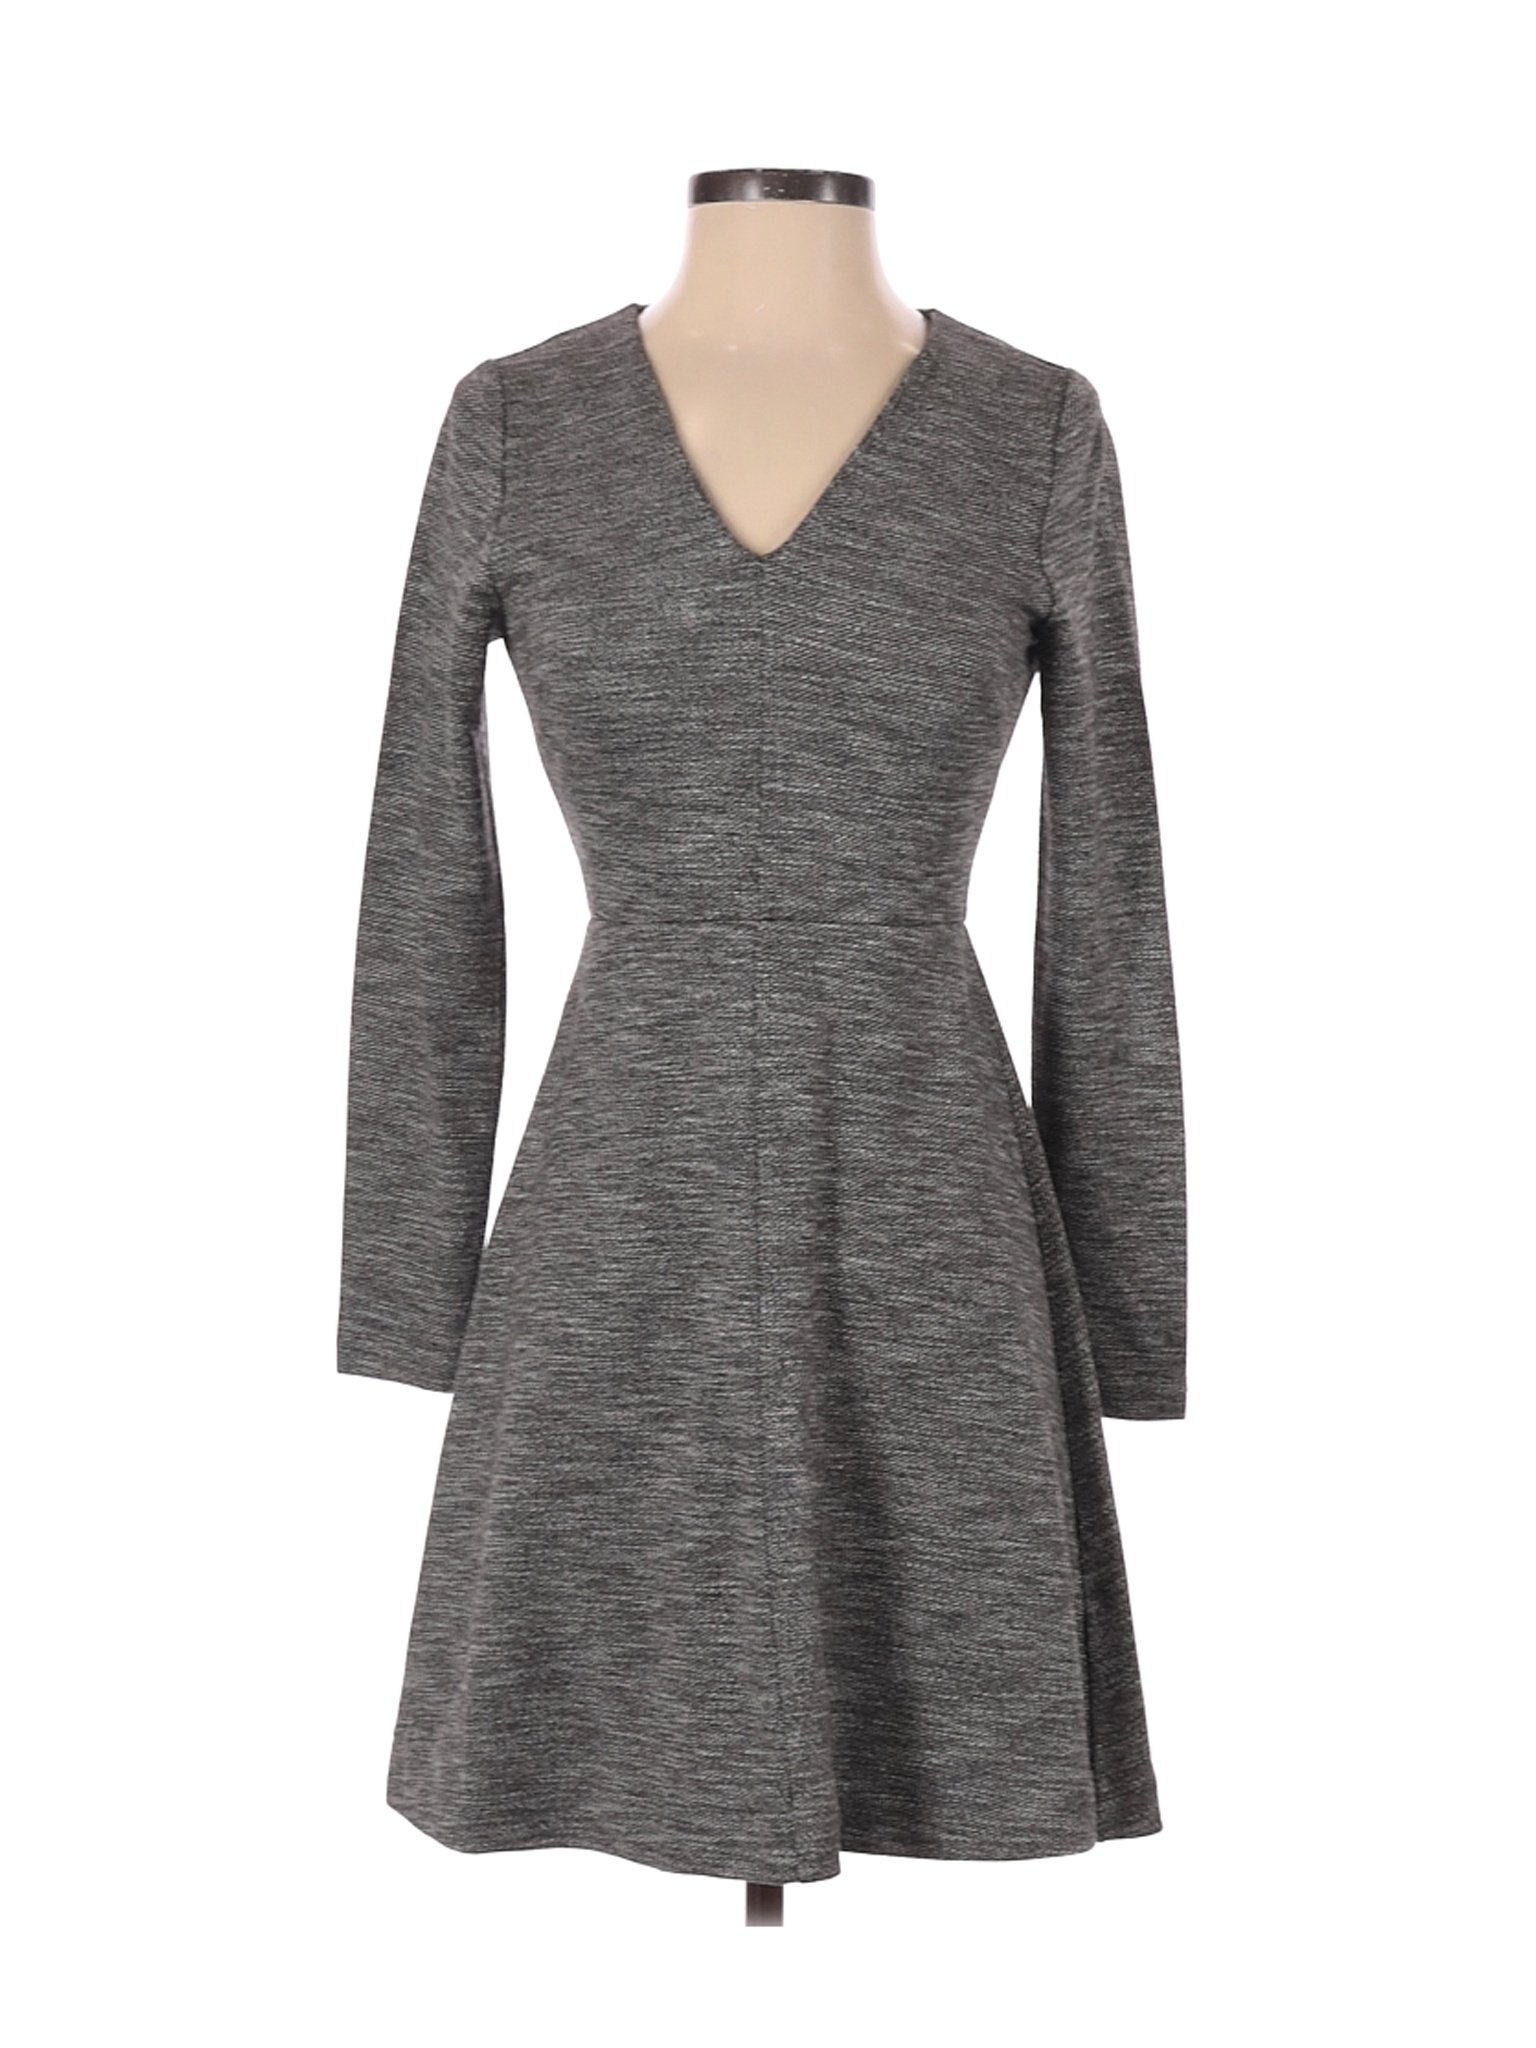 Madewell Women Gray Casual Dress 00 | eBay